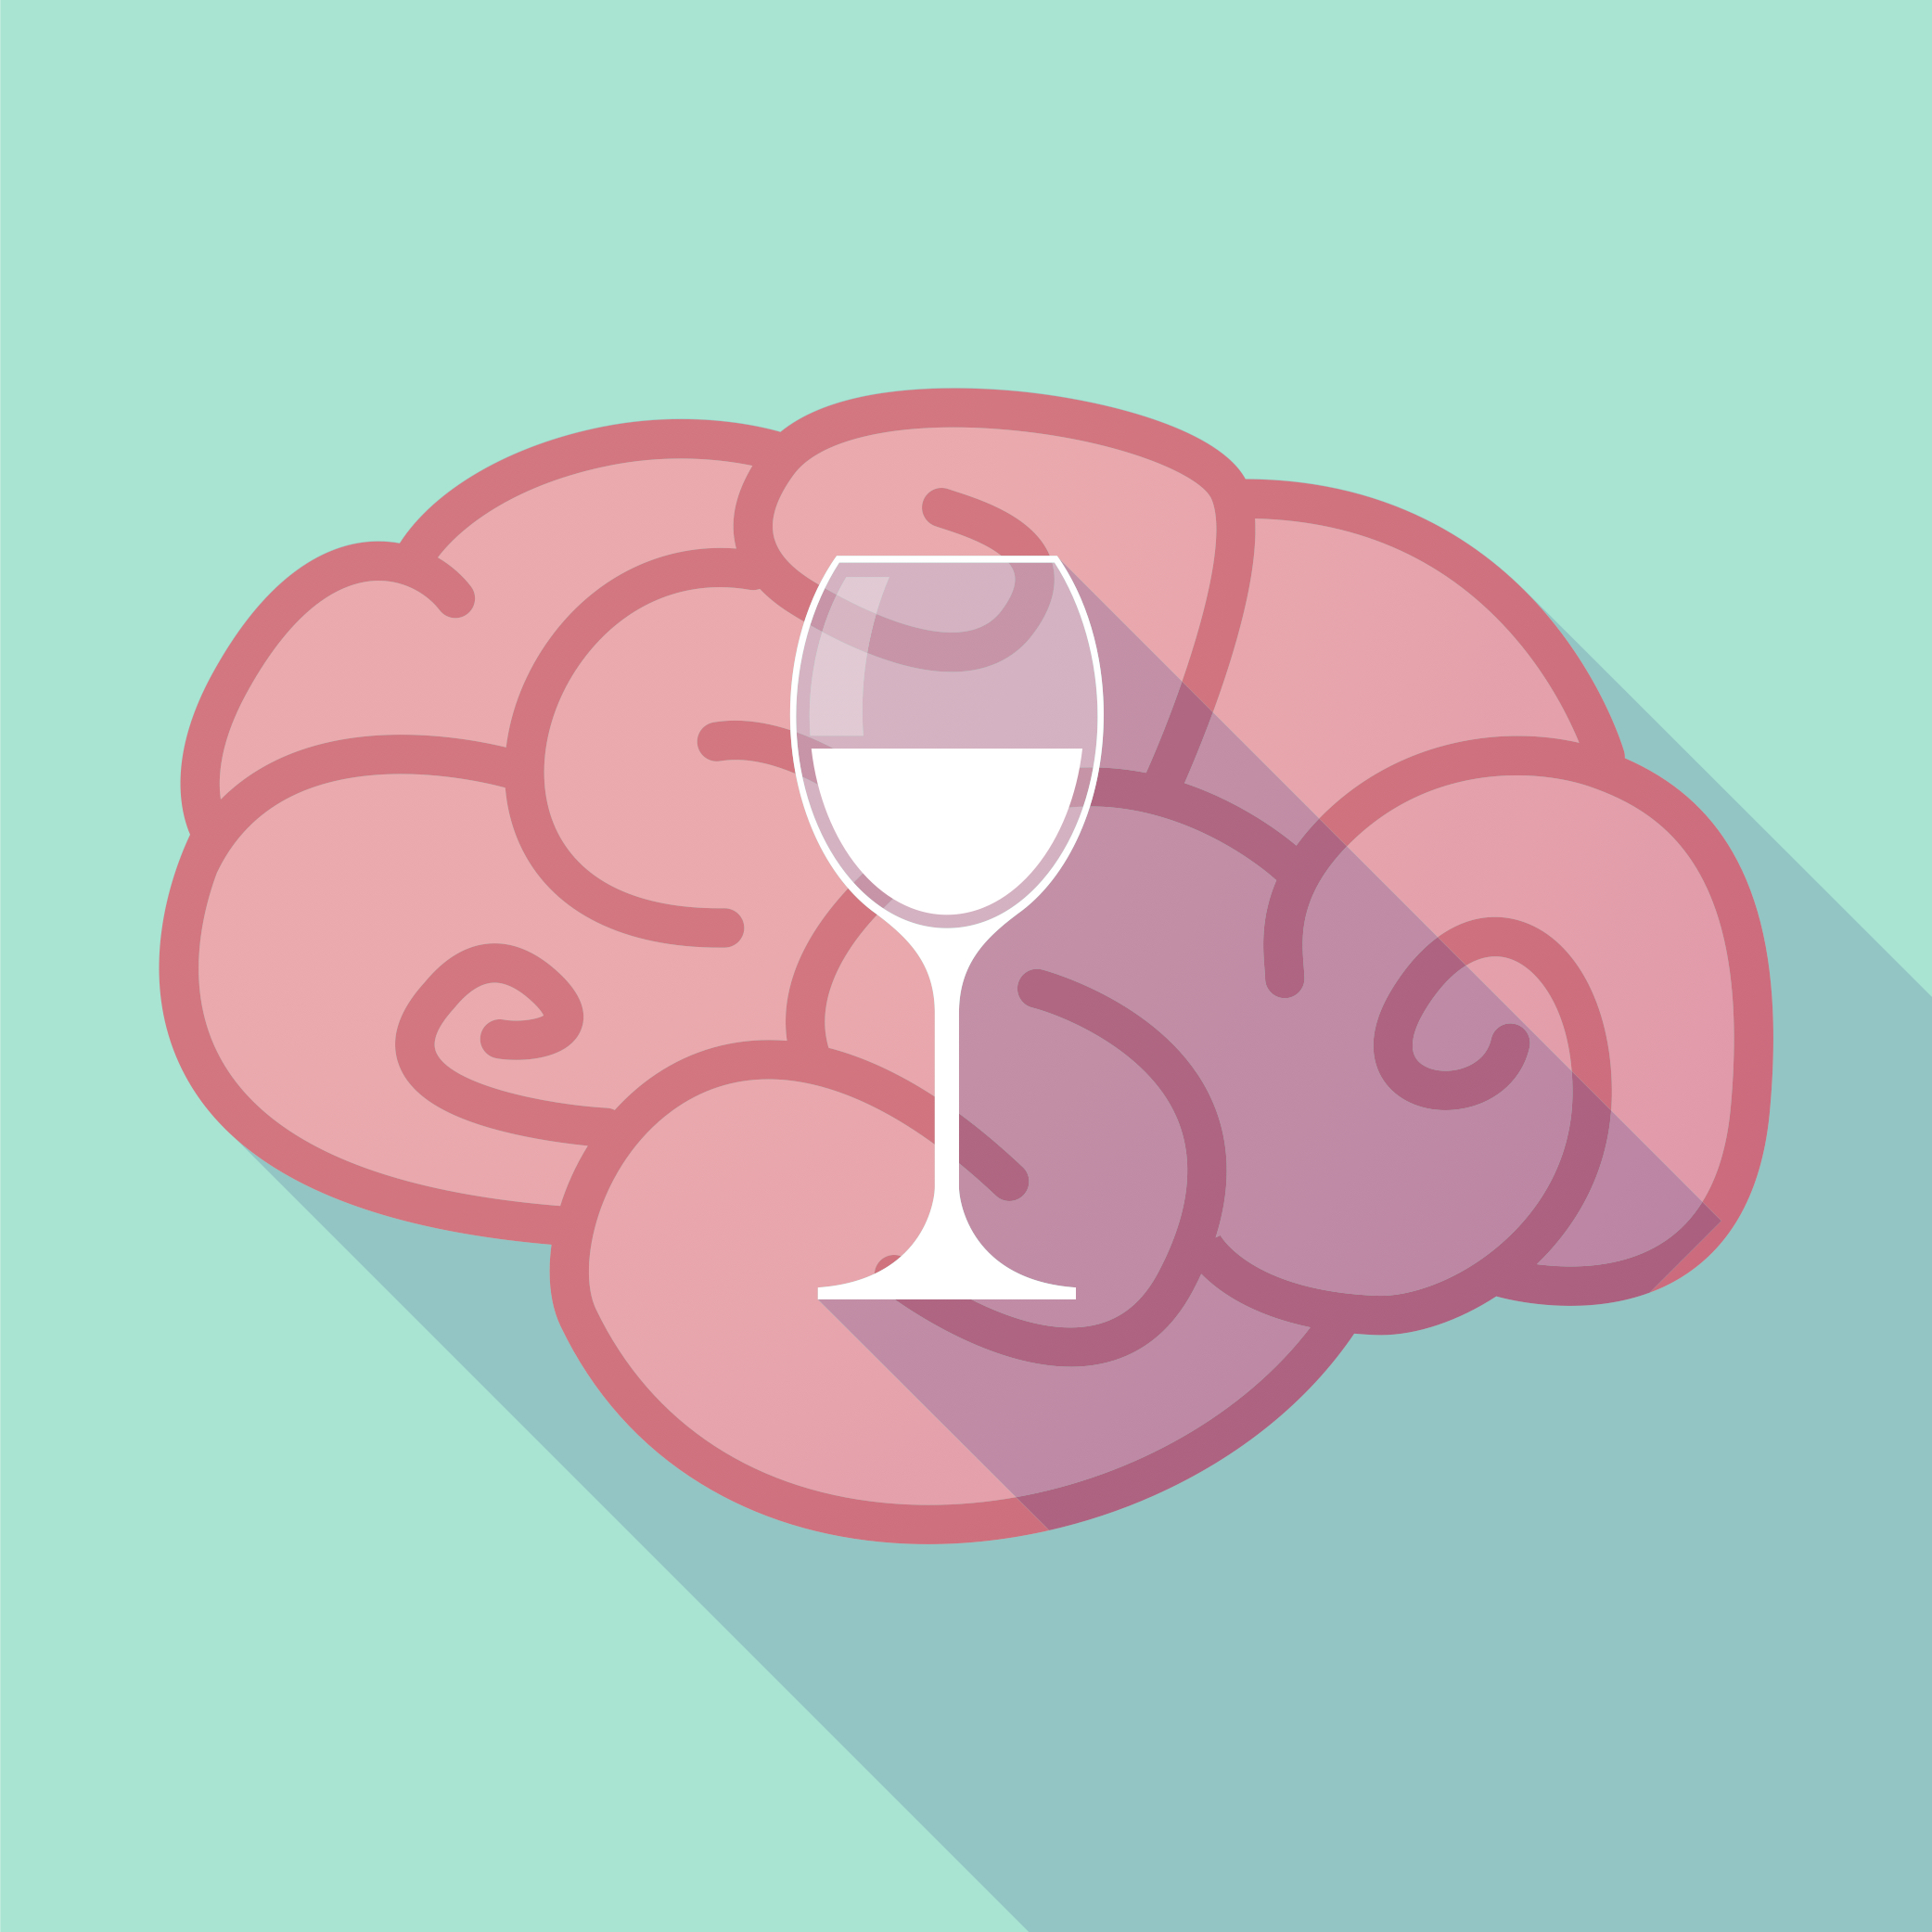 Wine DSGn Thinking®, a unique method